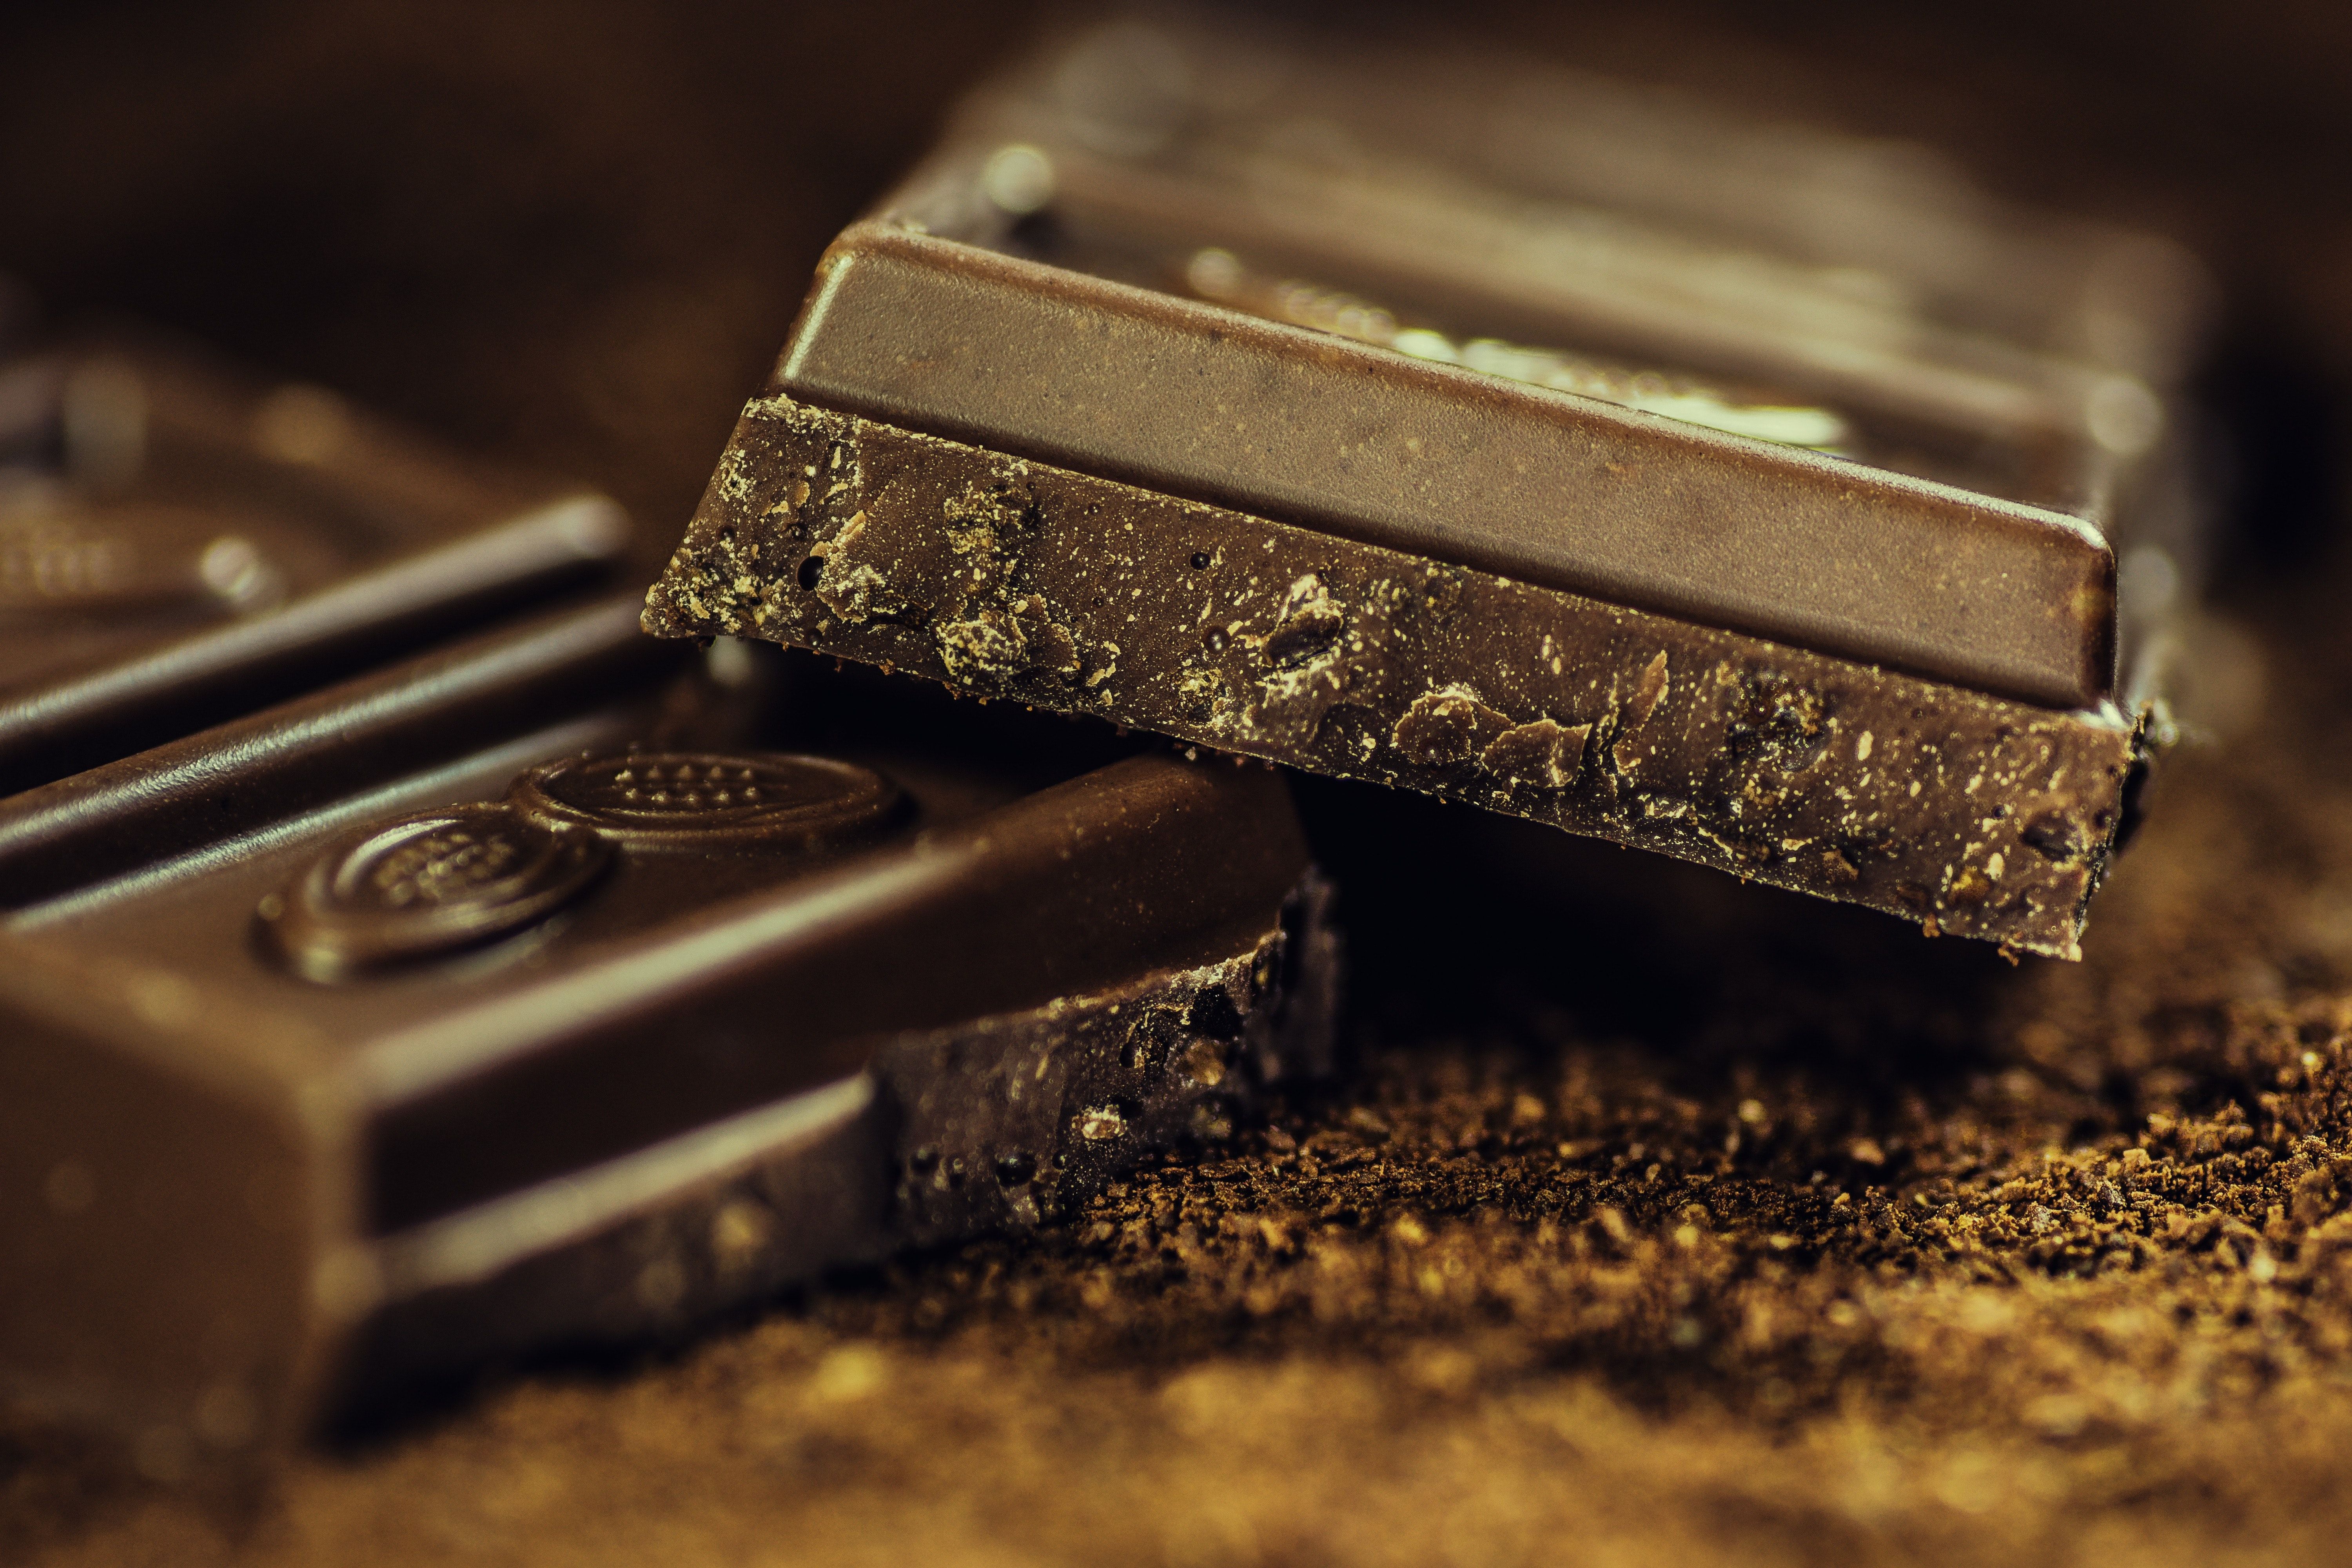 Best Chocolate Photo · 100% Free Downloads